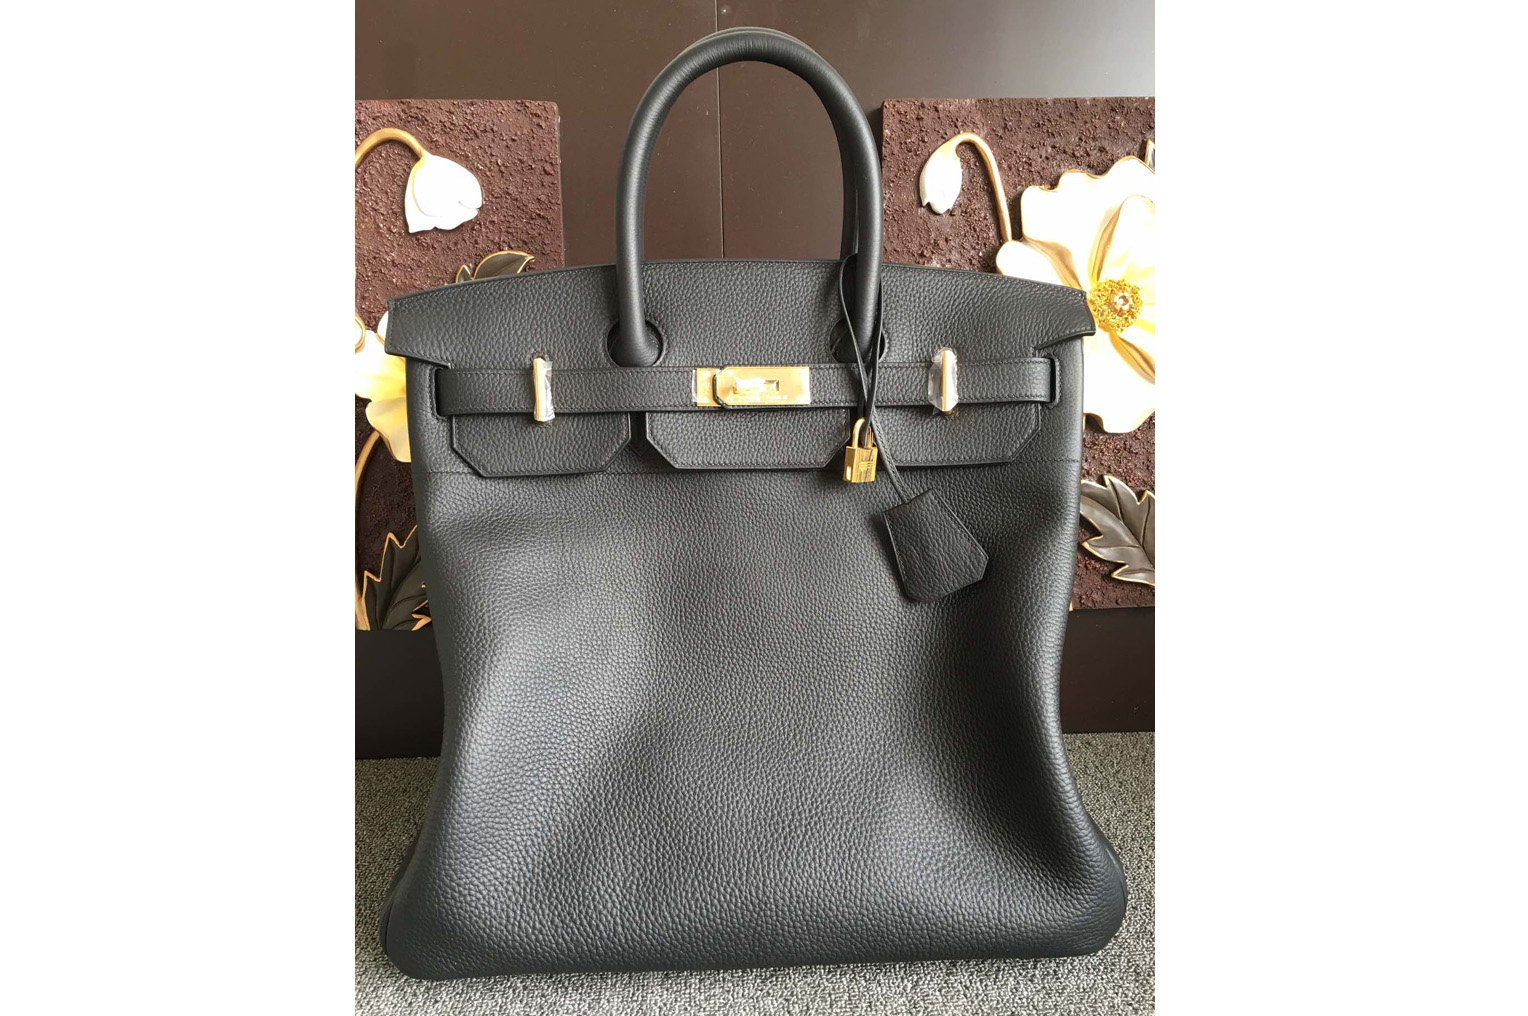 Hermes Sac Birkin HAC 40 Bag in Black Togo Leather